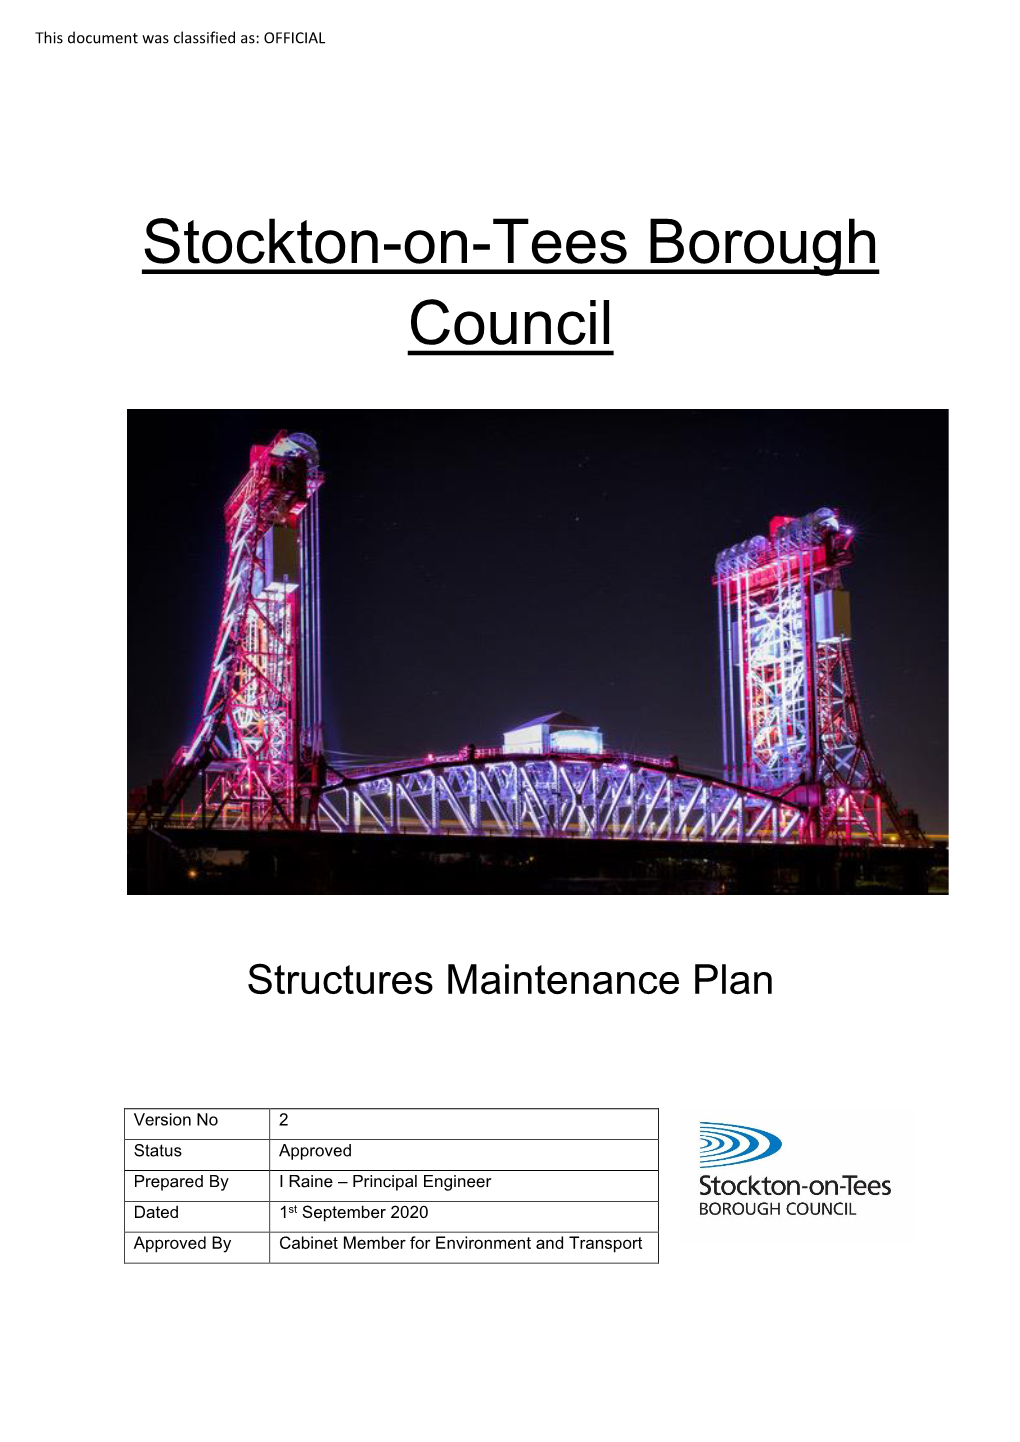 Structures Maintenance Plan